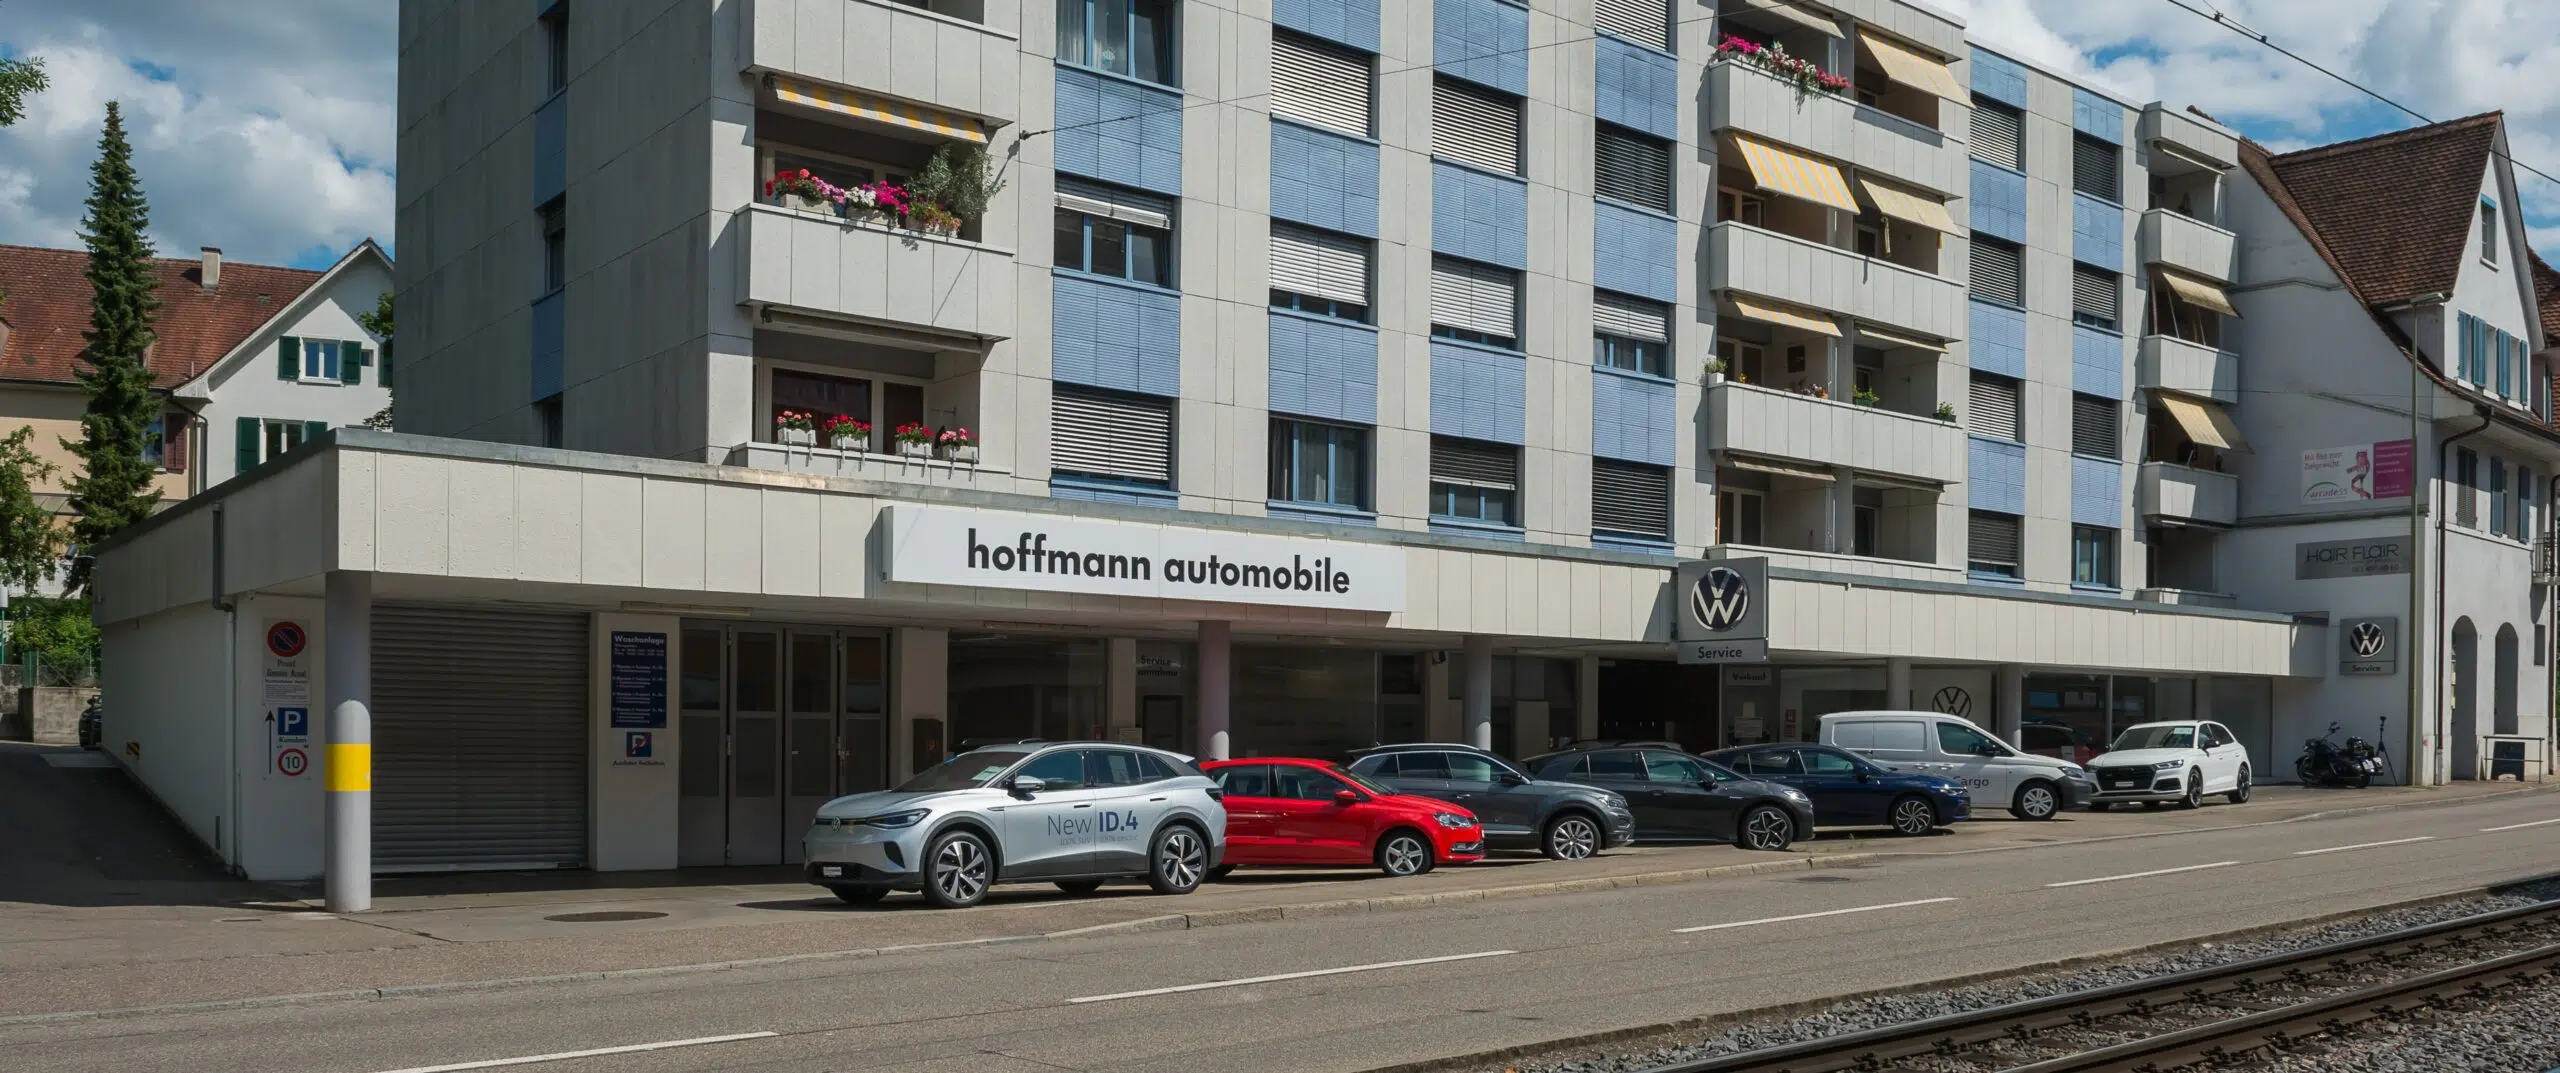 Binningen Hoffmann Automobile